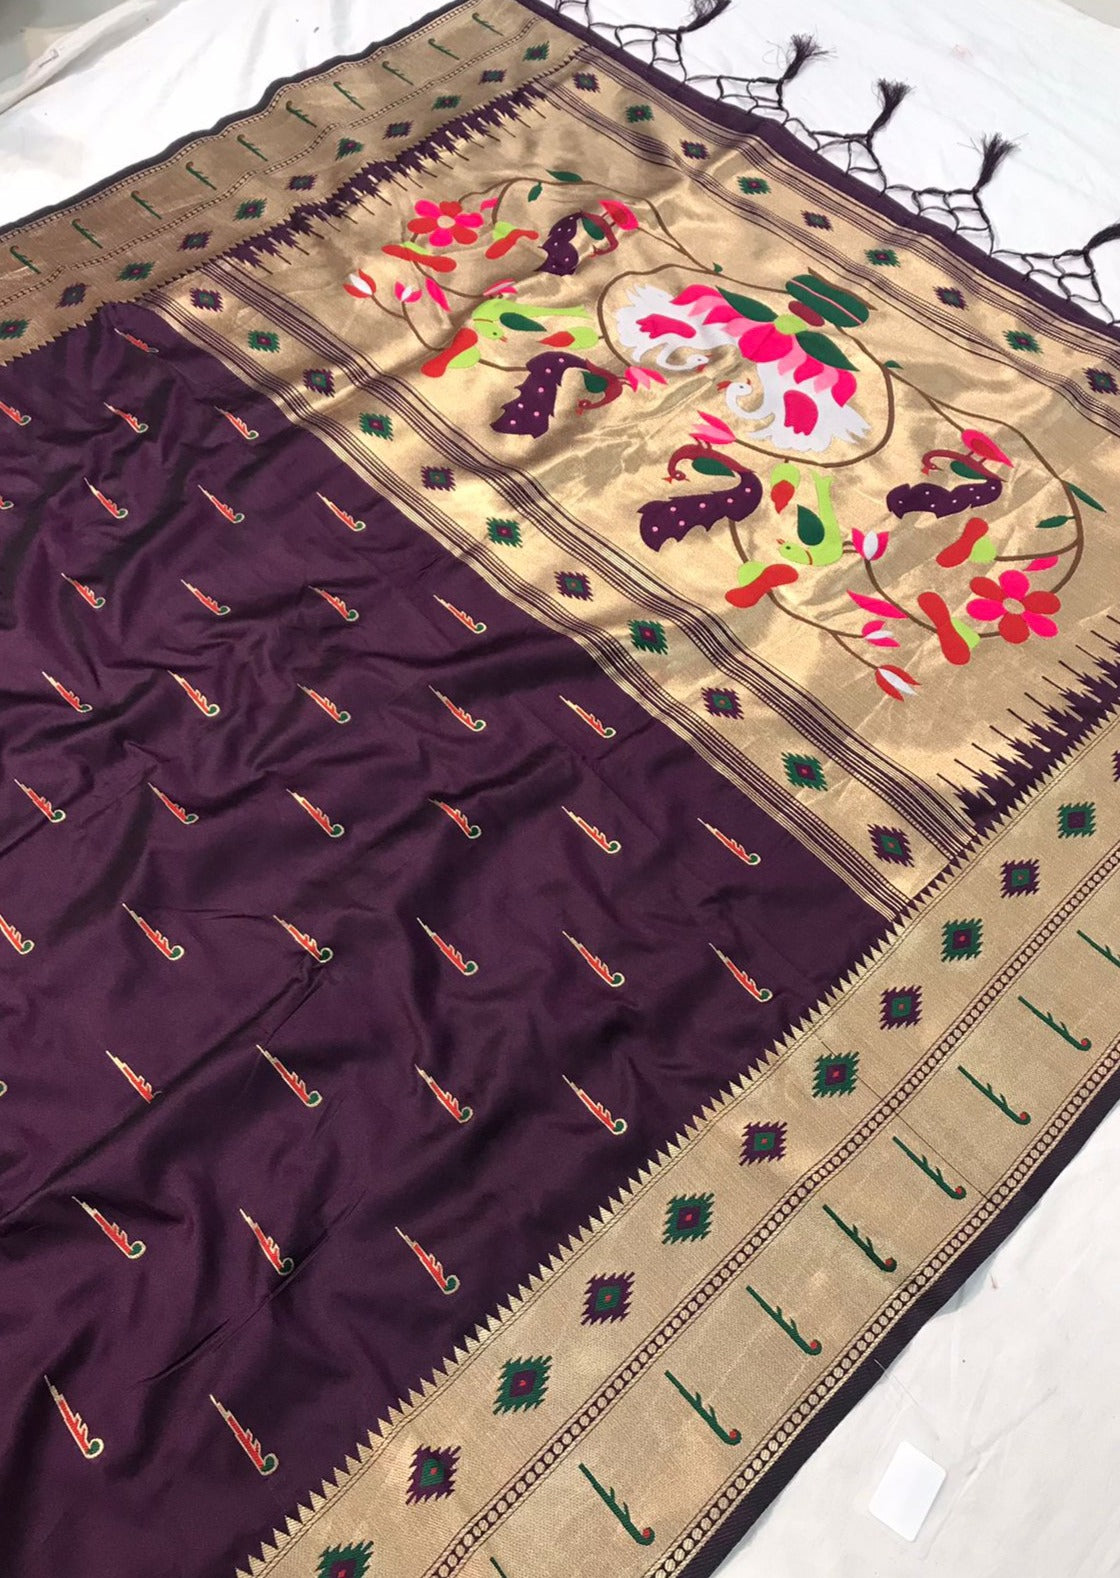 Handloom paithani sarees online uk shopping with price.